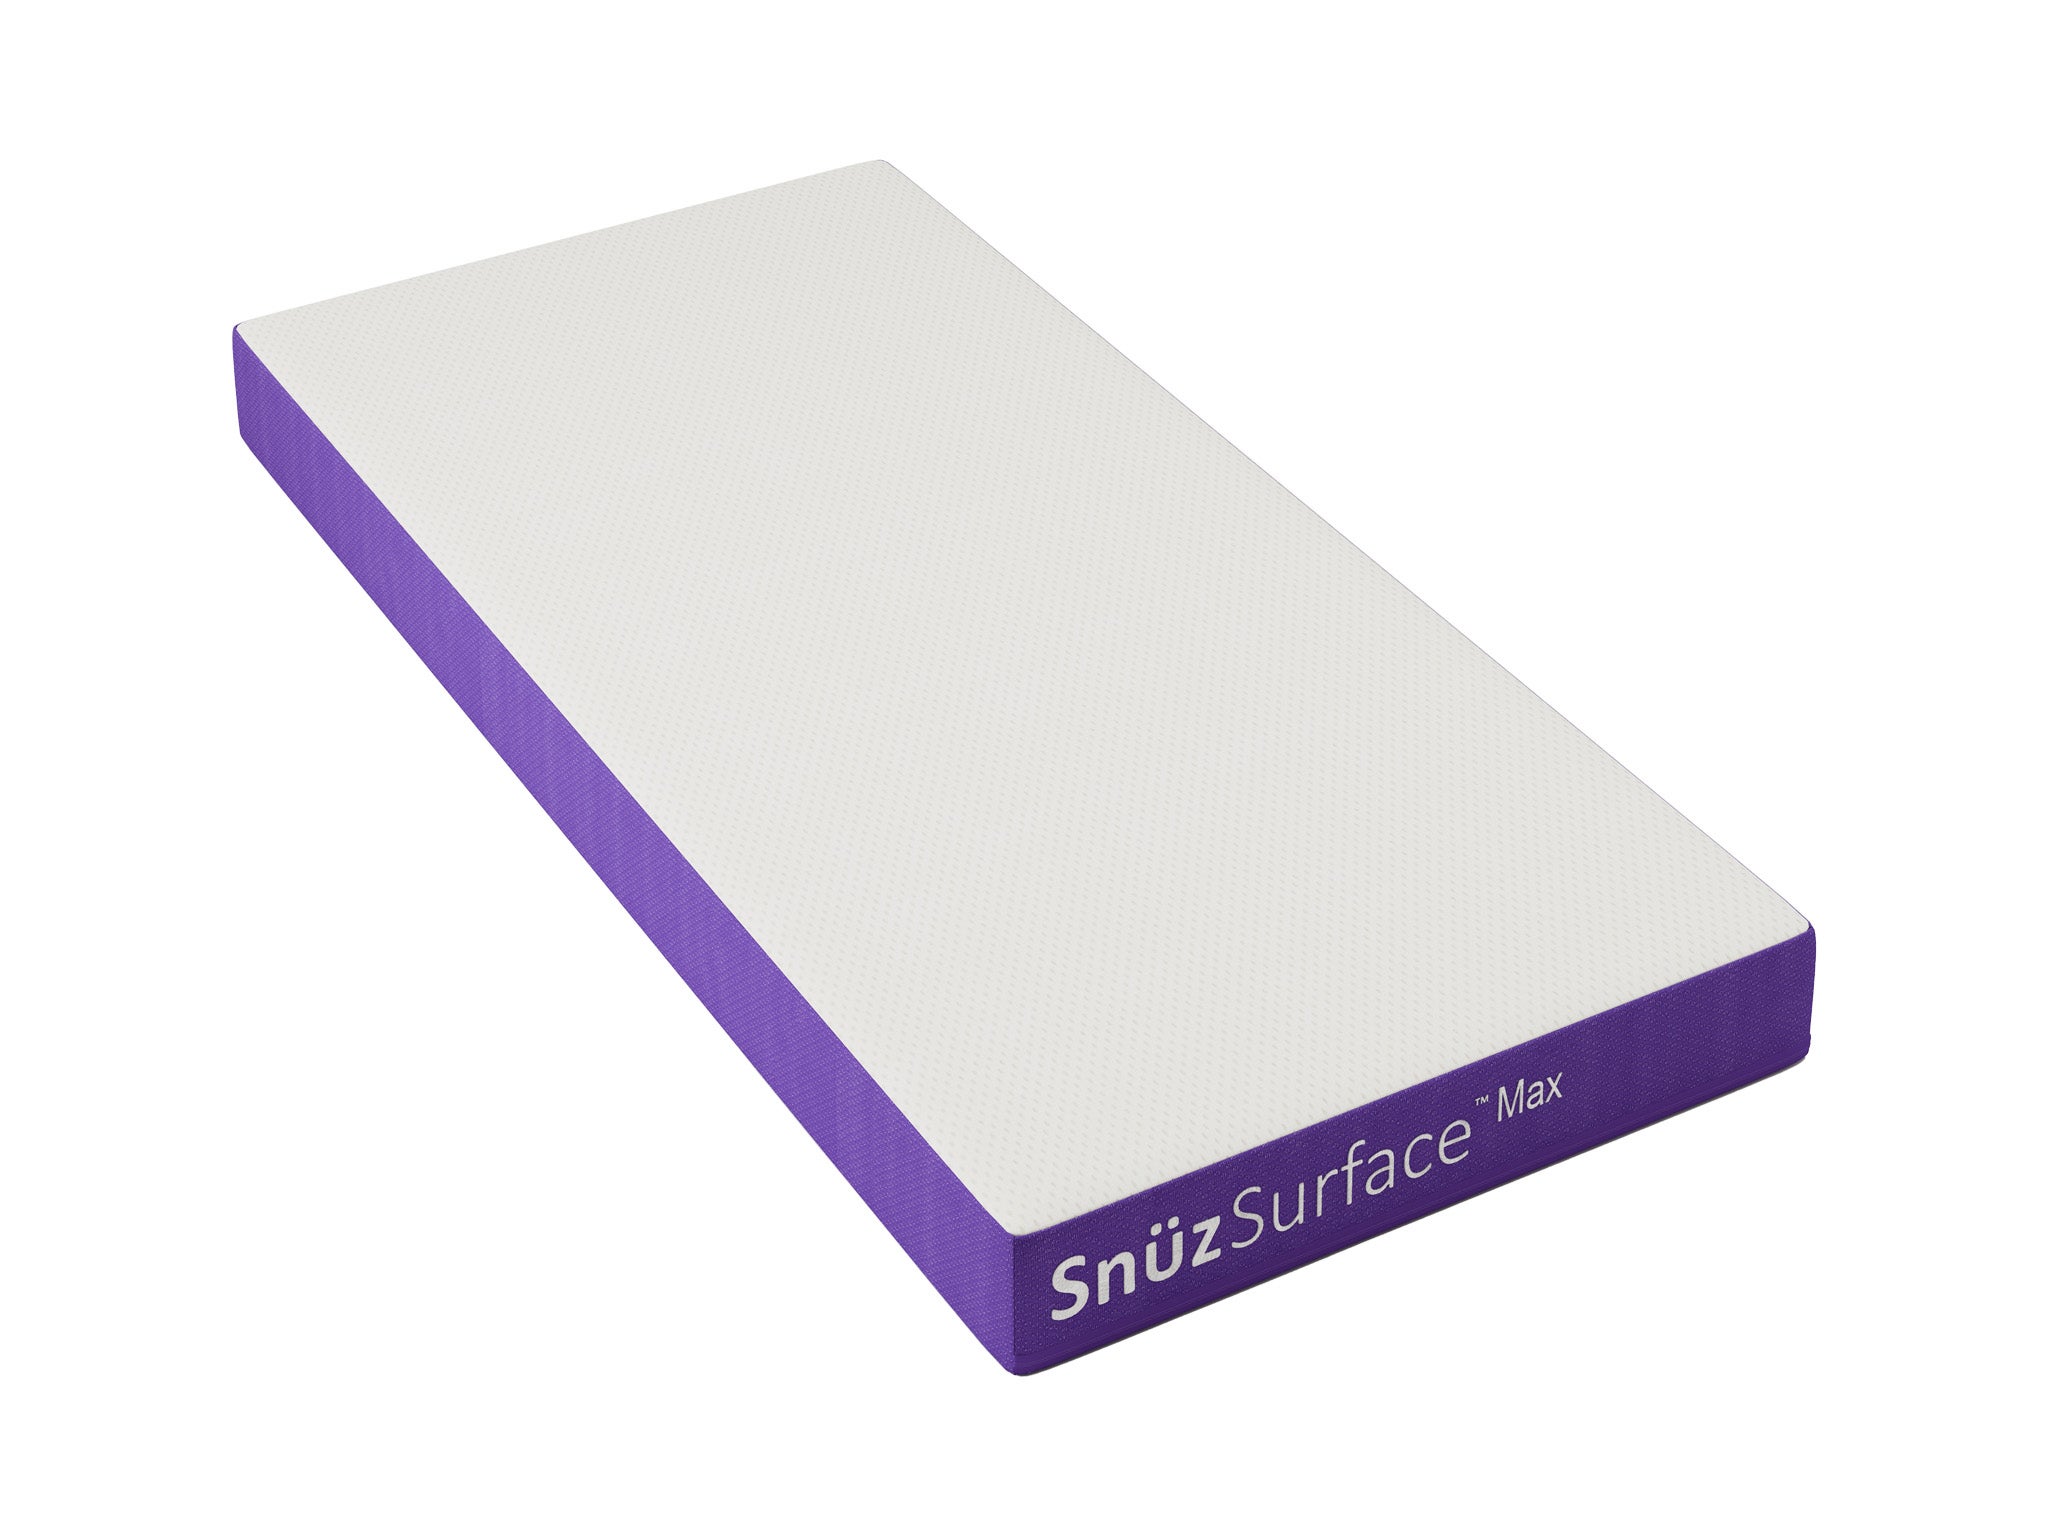 SnuzSurface max junior mattress